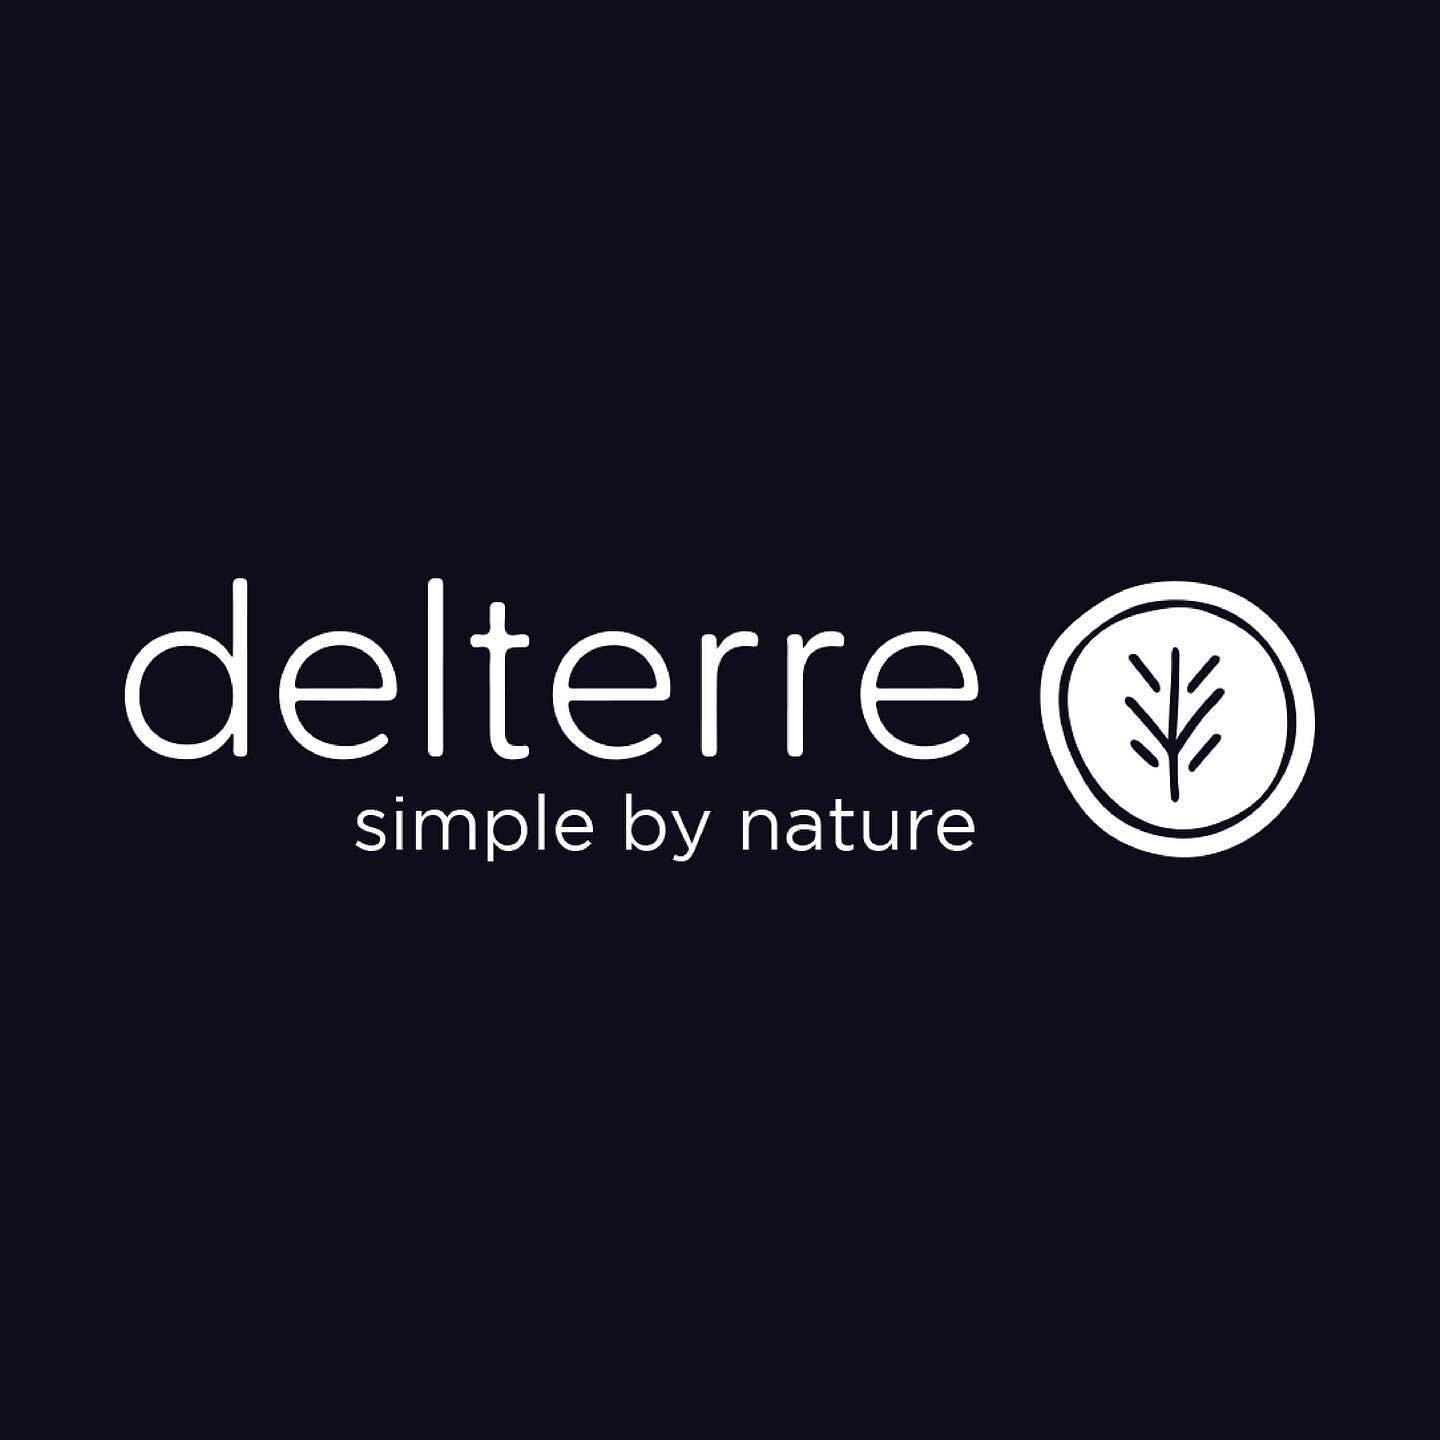 A premium, nature inspired CBD brand